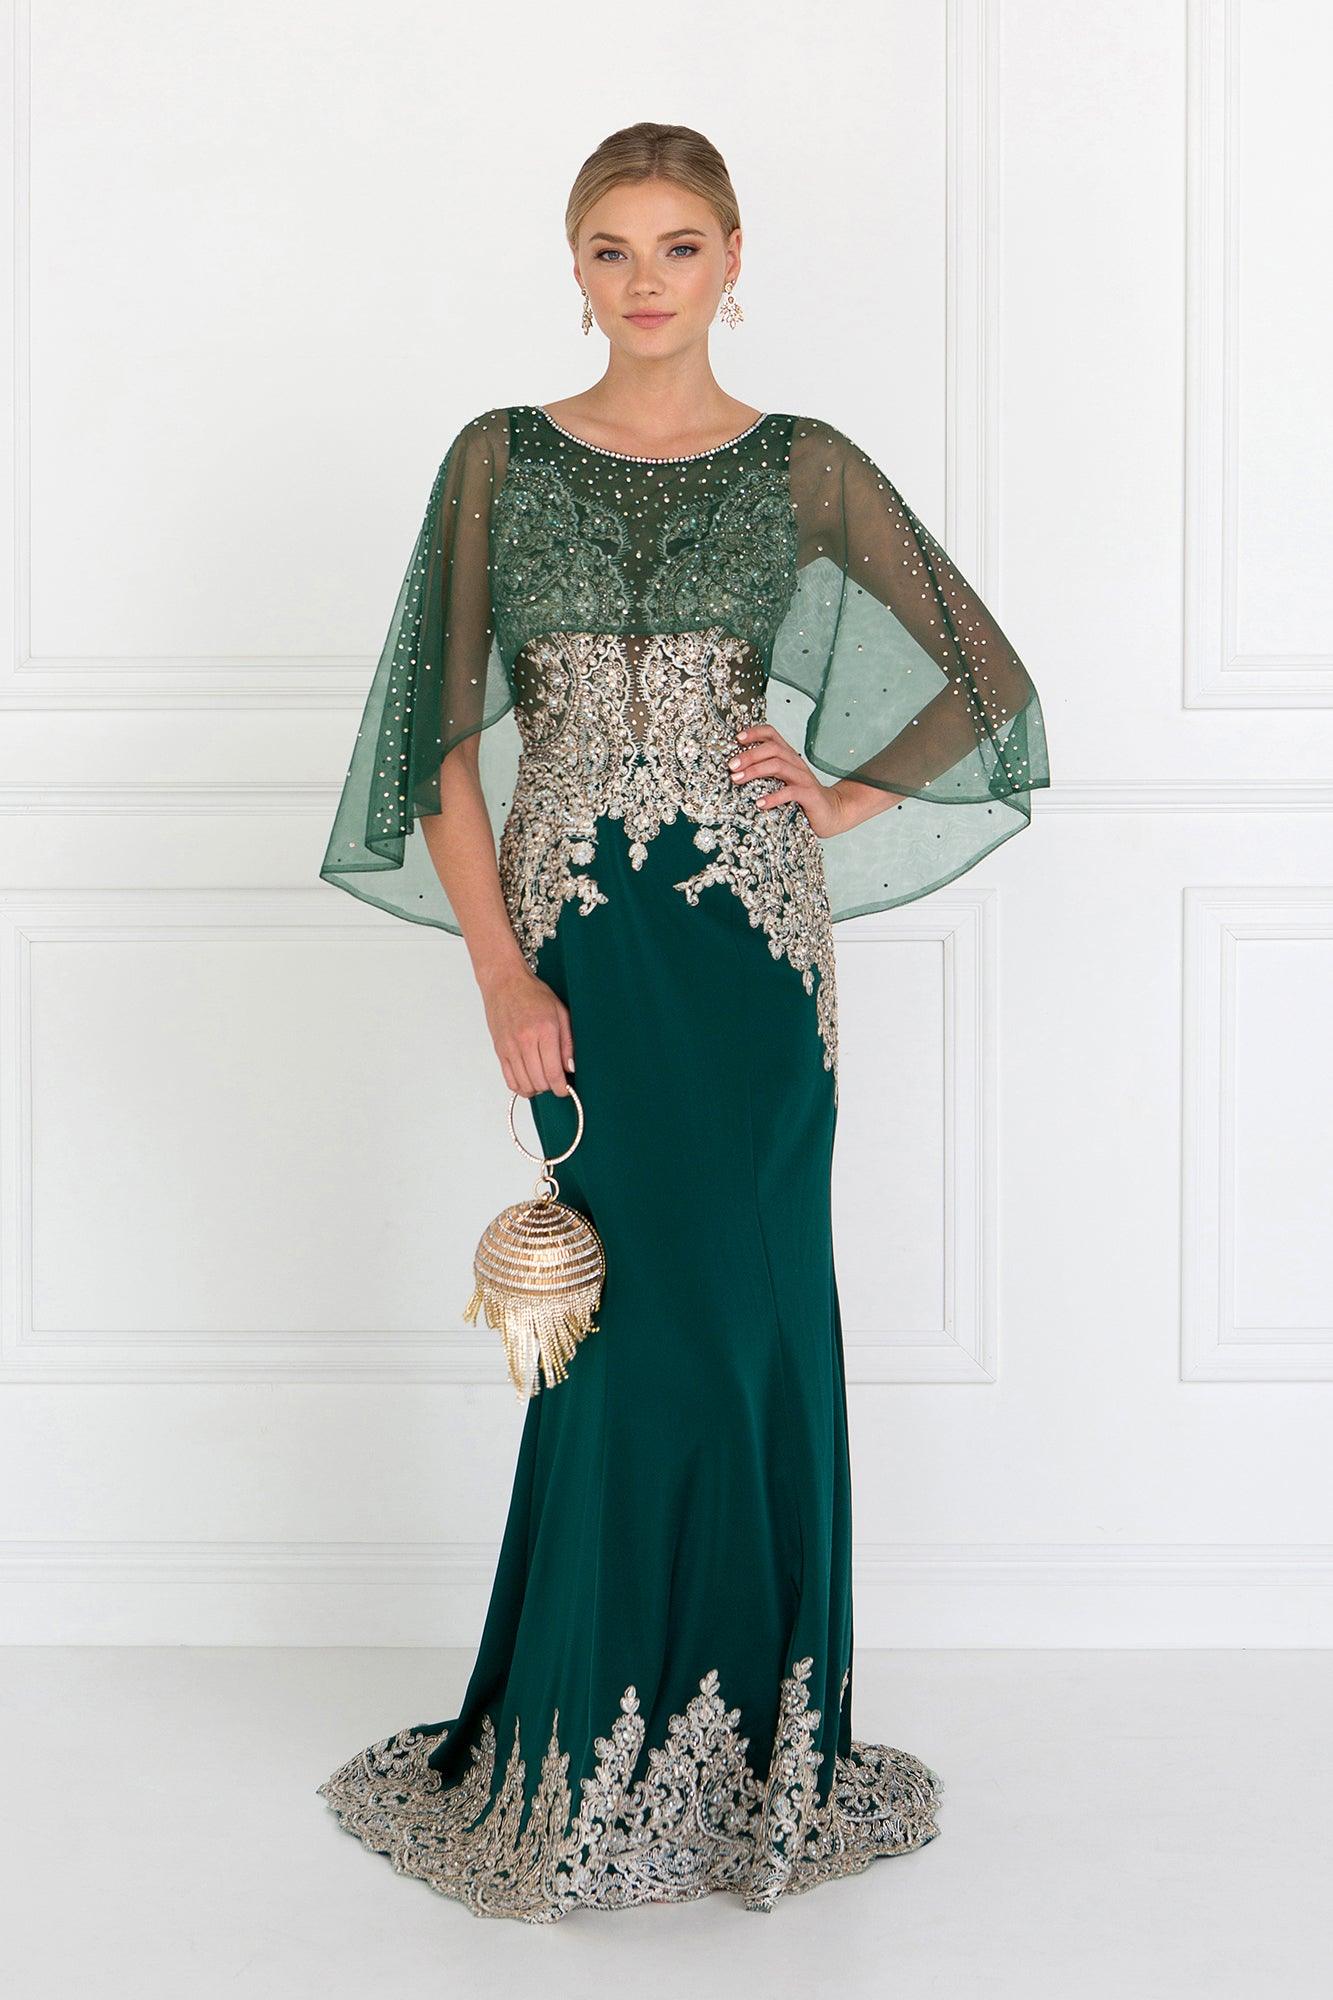 Long Formal Dress Evening Gown Cape Sleeves - The Dress Outlet Elizabeth K